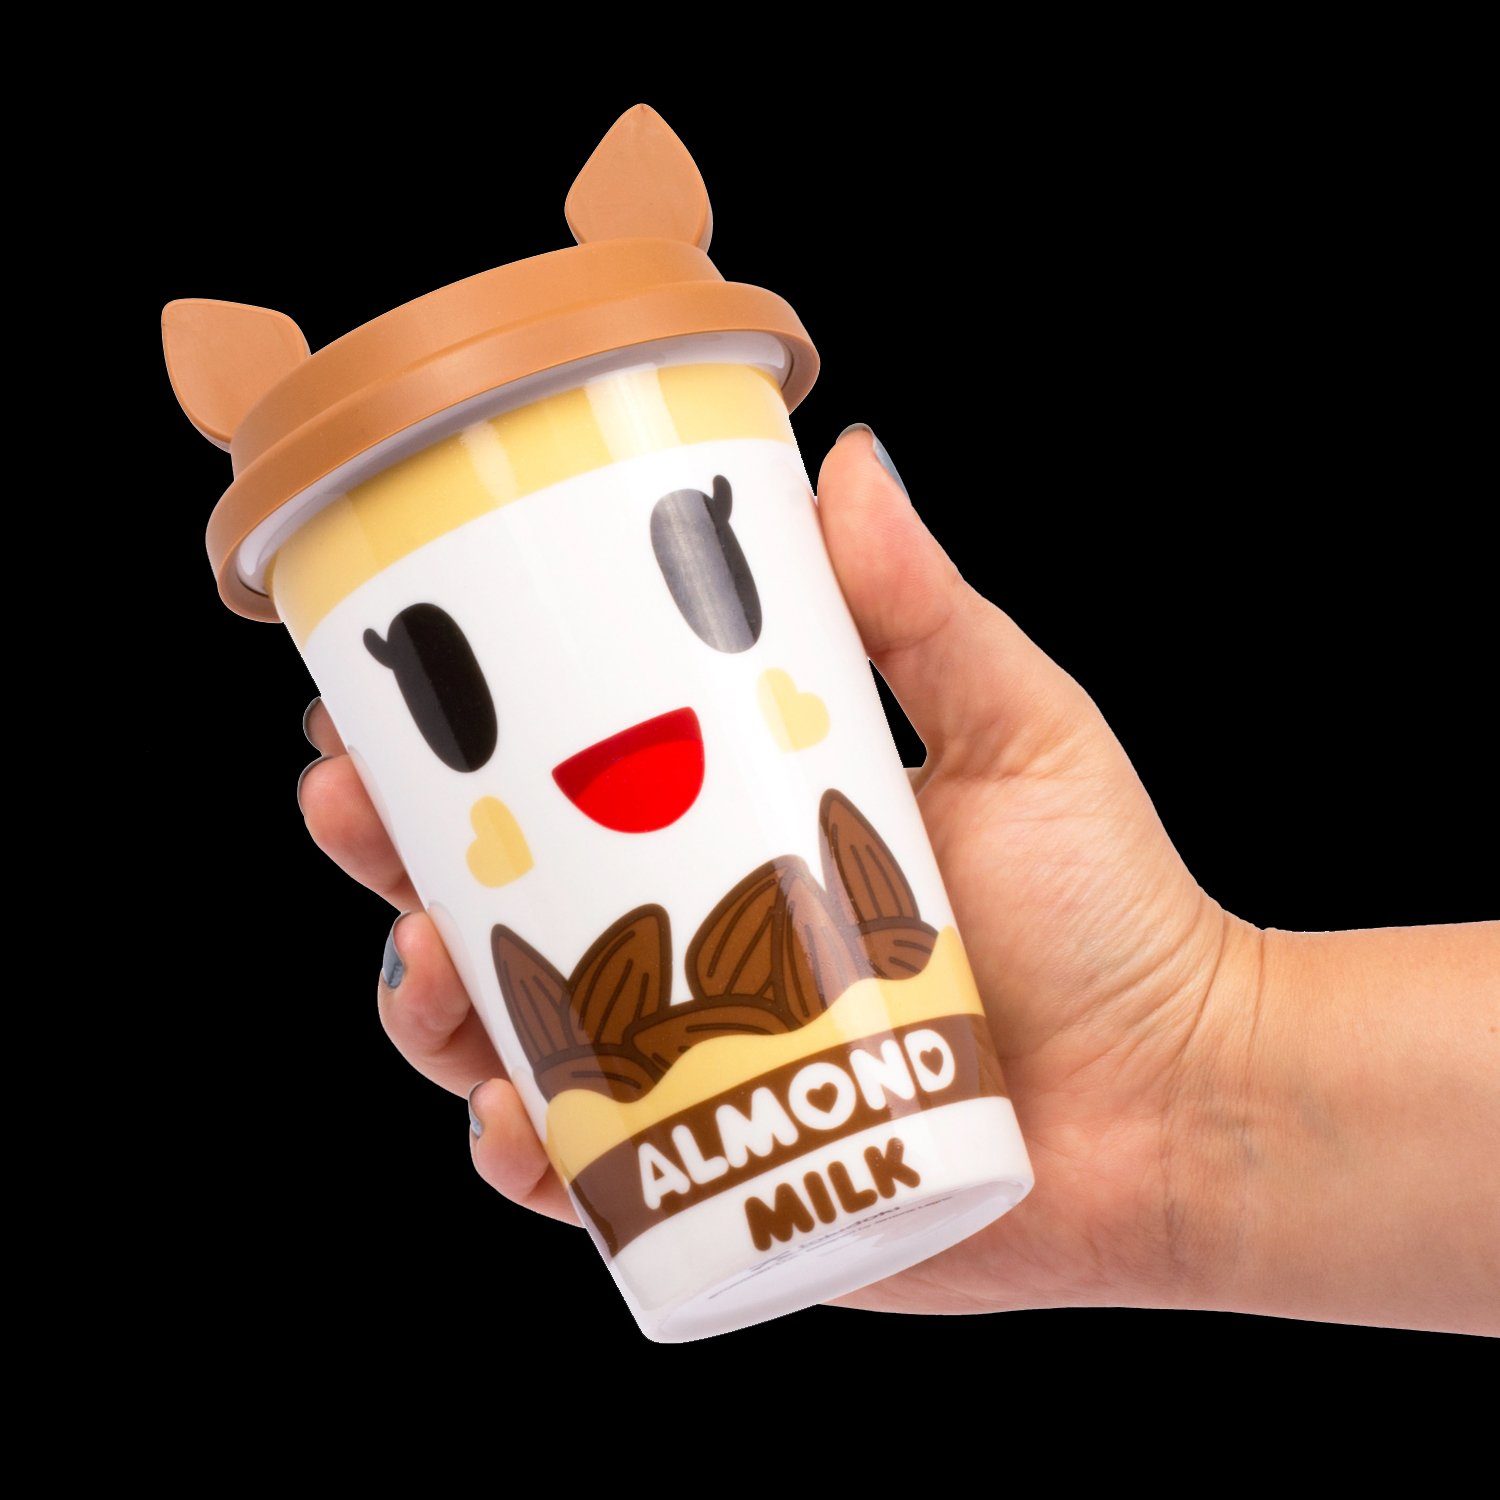 Thumbs Up Trinkbecher Almond, - Coffee-to-go-Becher Keramik tokidoki Keramik